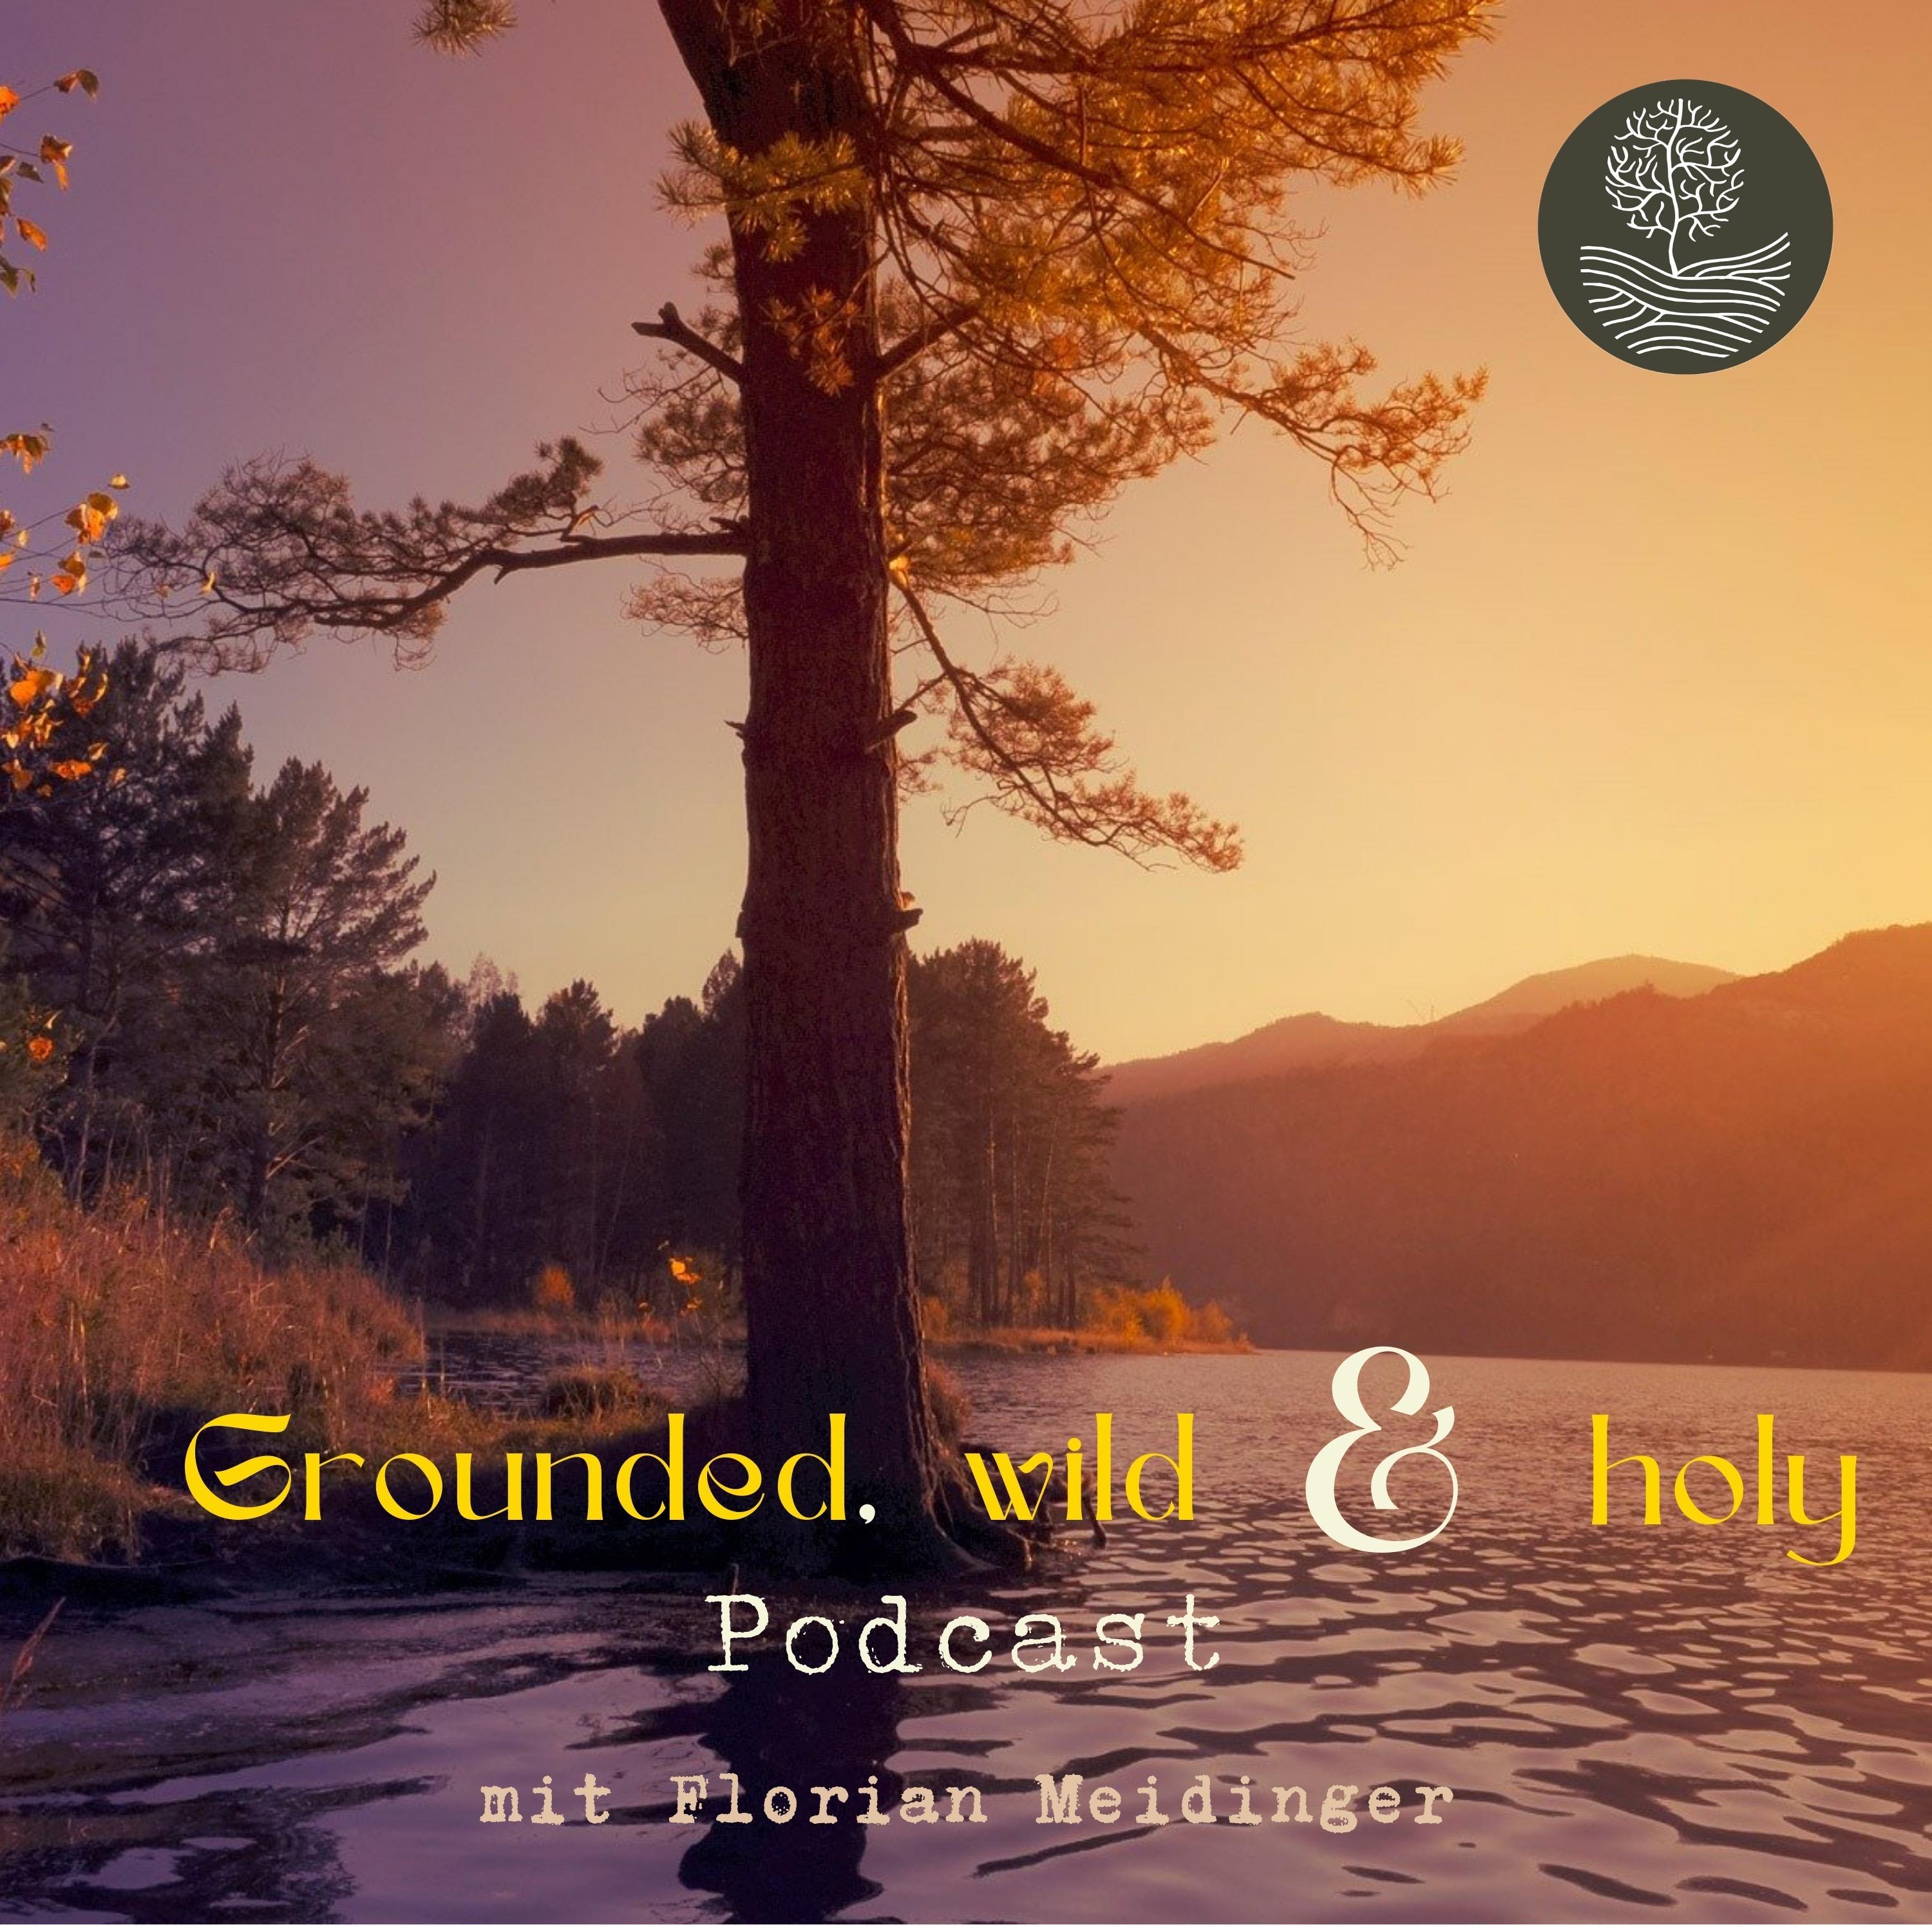 Grounded, wild & holy